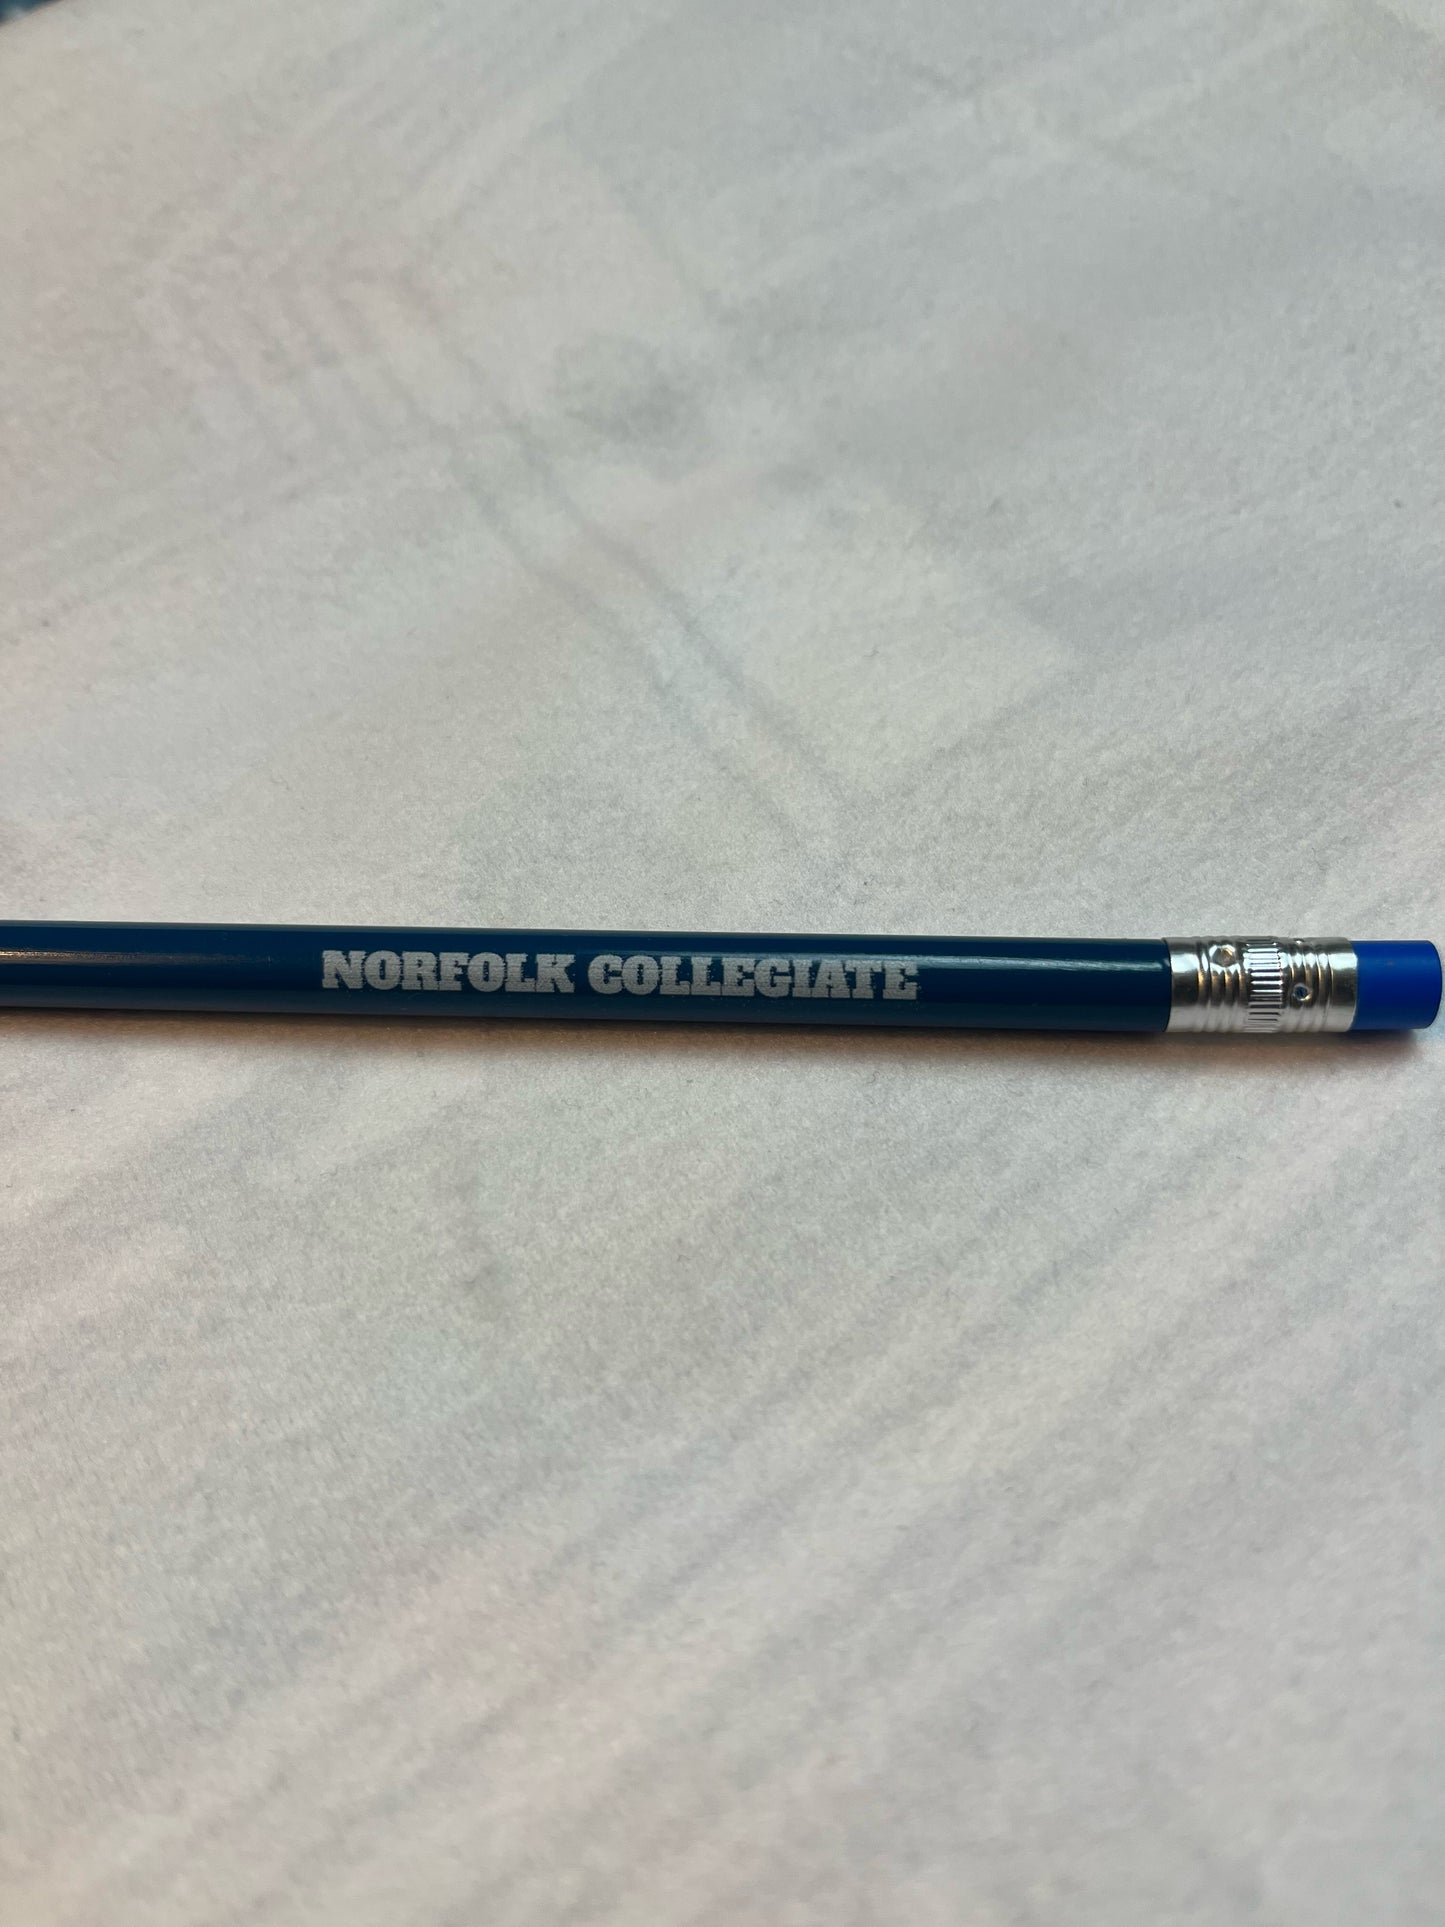 Pencil - Wooden with Norfolk Collegiate